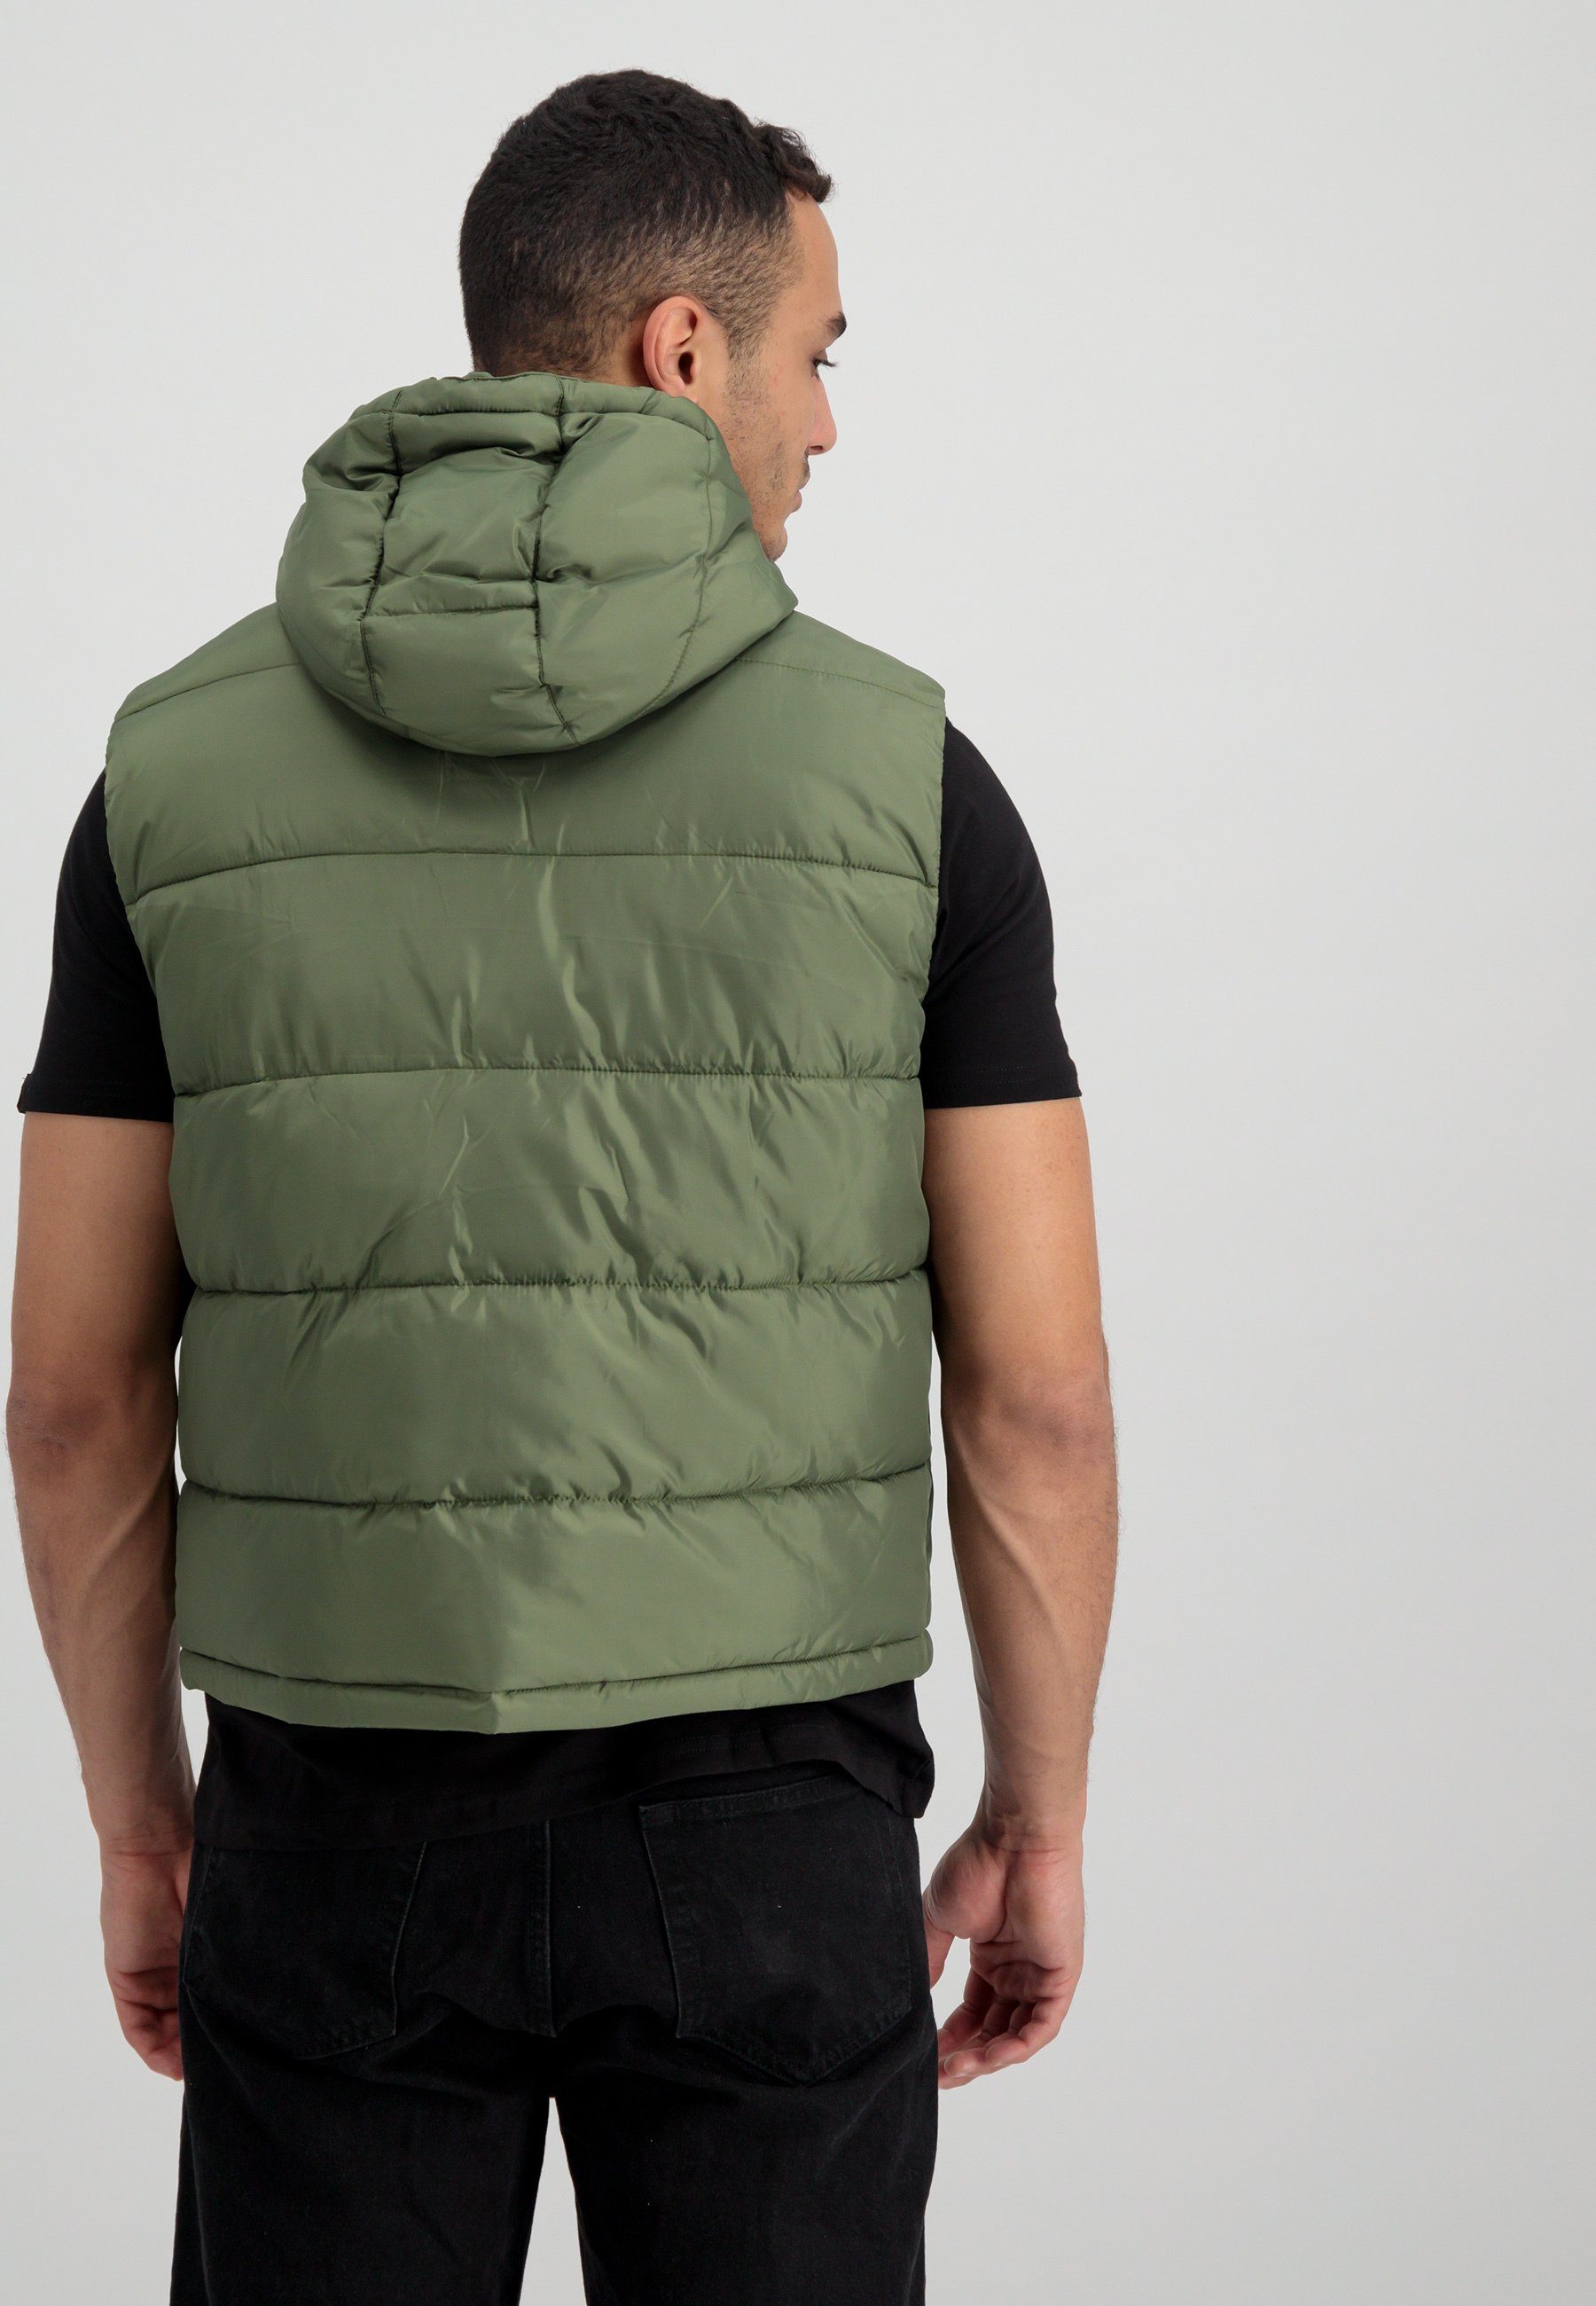 Men FD Alpha sage-green Vests Alpha Puffer Vest Industries Hooded Blouson - Industries